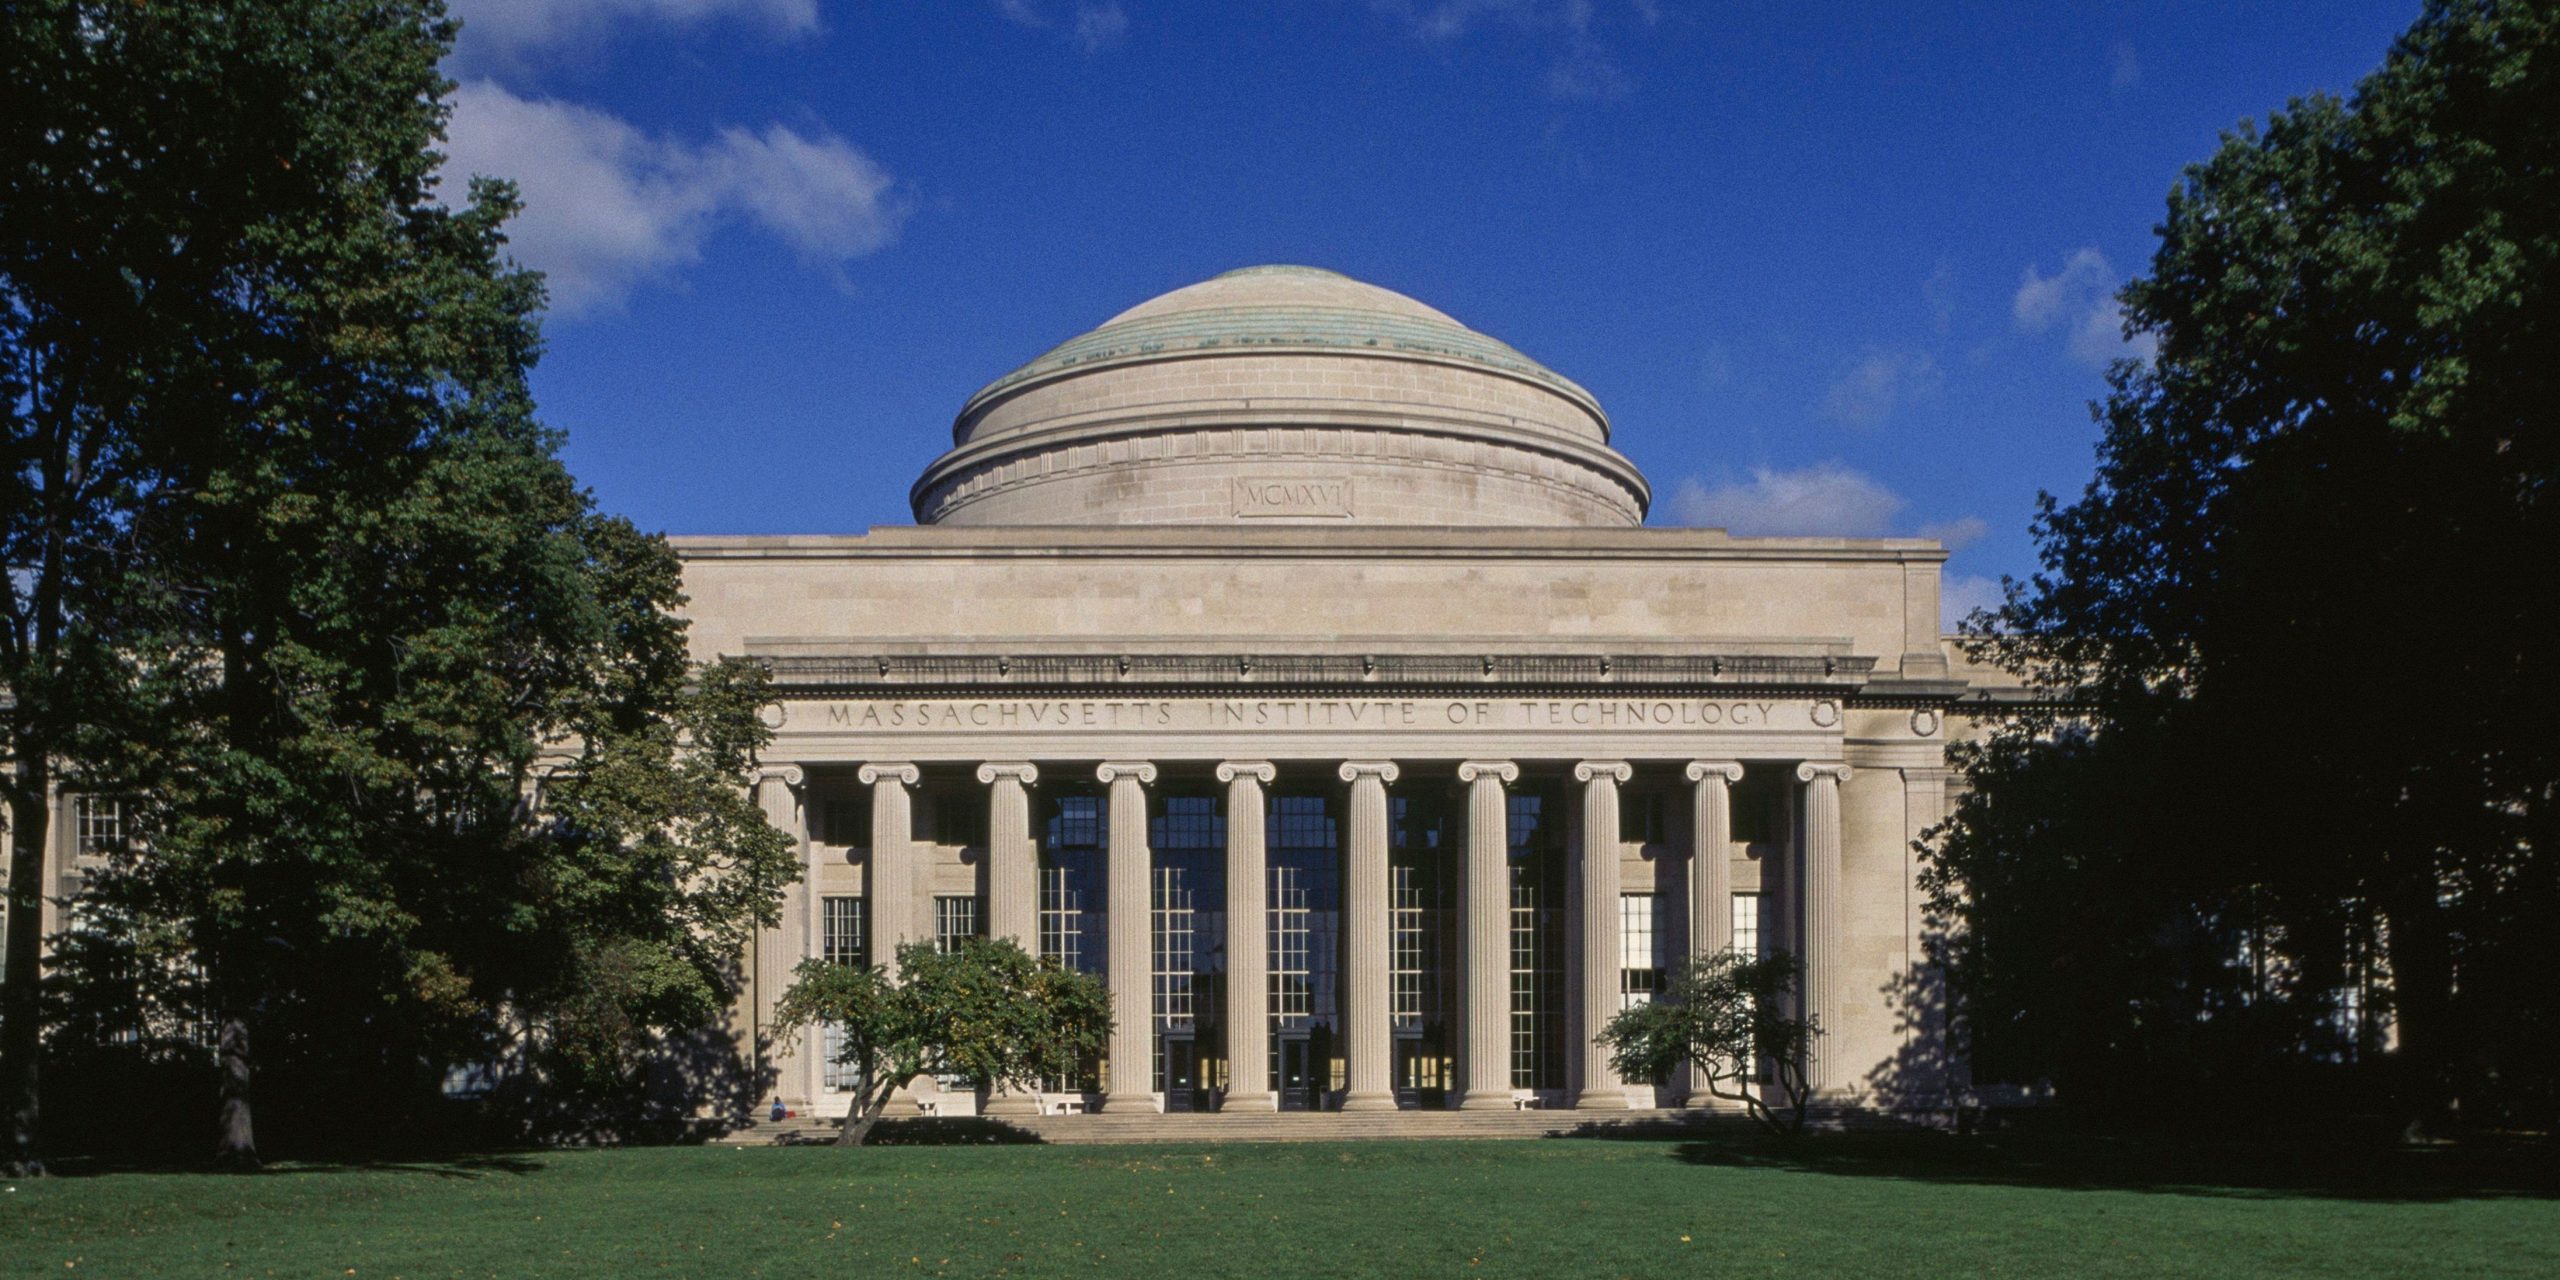 Massachusetts Institute of Technology, Cambridge, Massachusetts, United States of America.